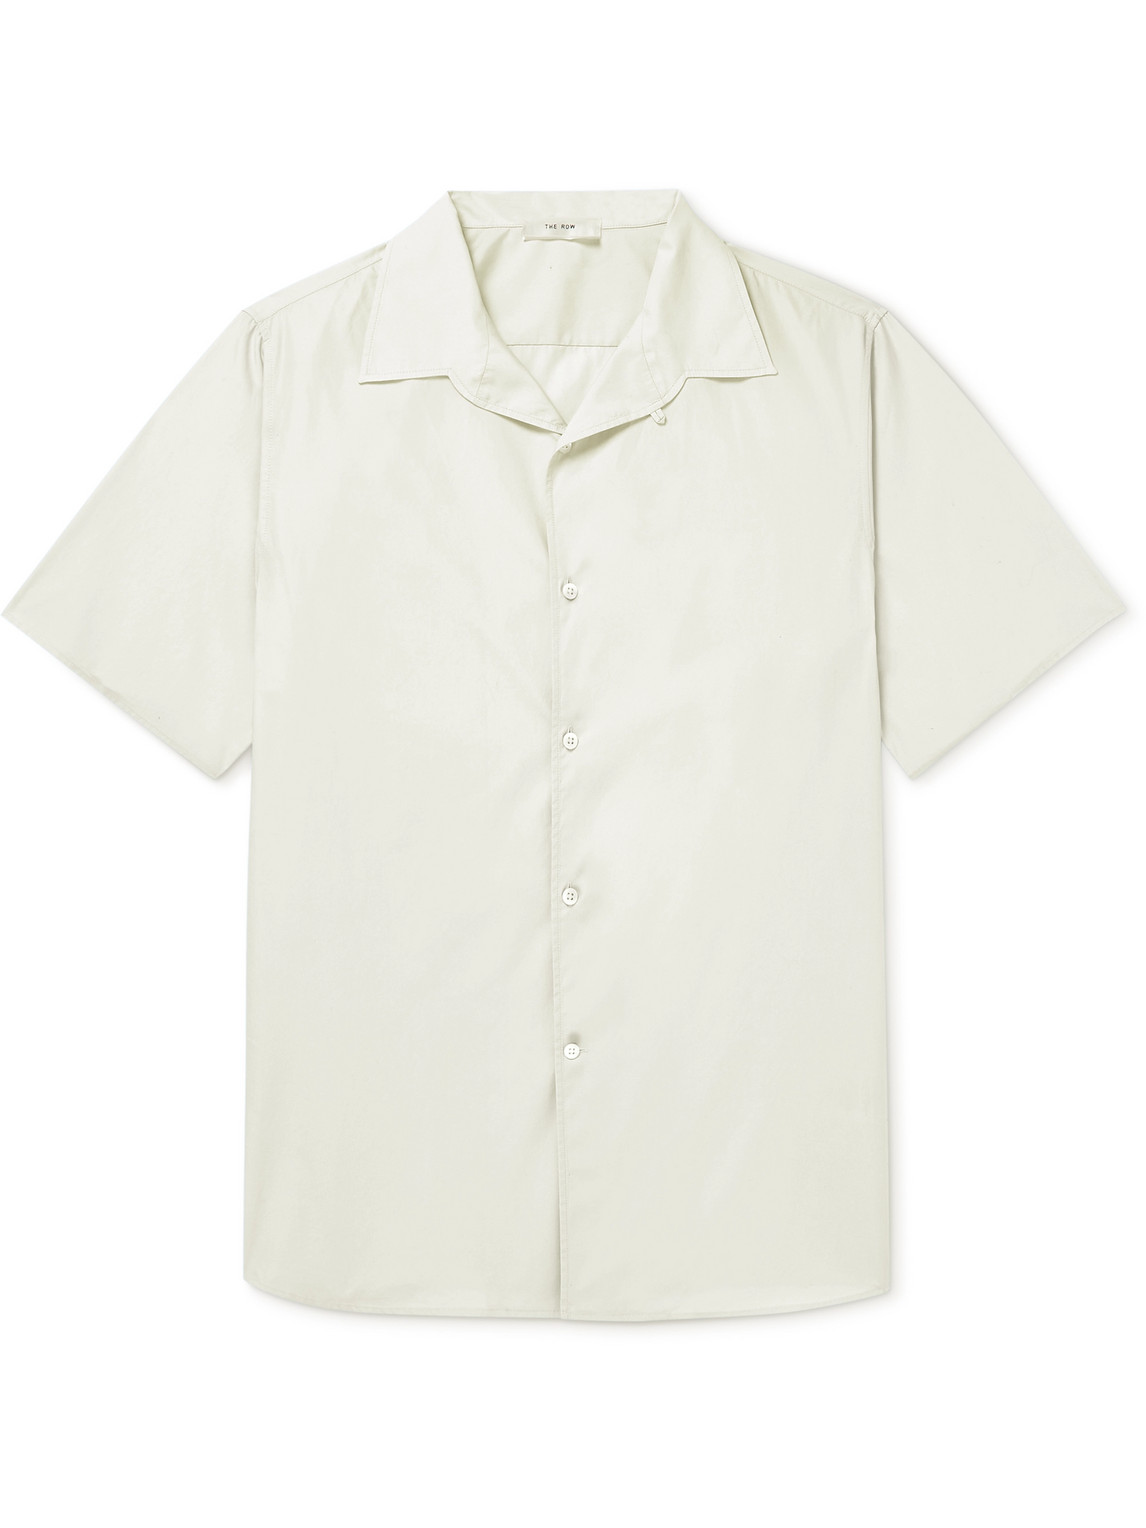 Giuseppe Cotton-Poplin Shirt